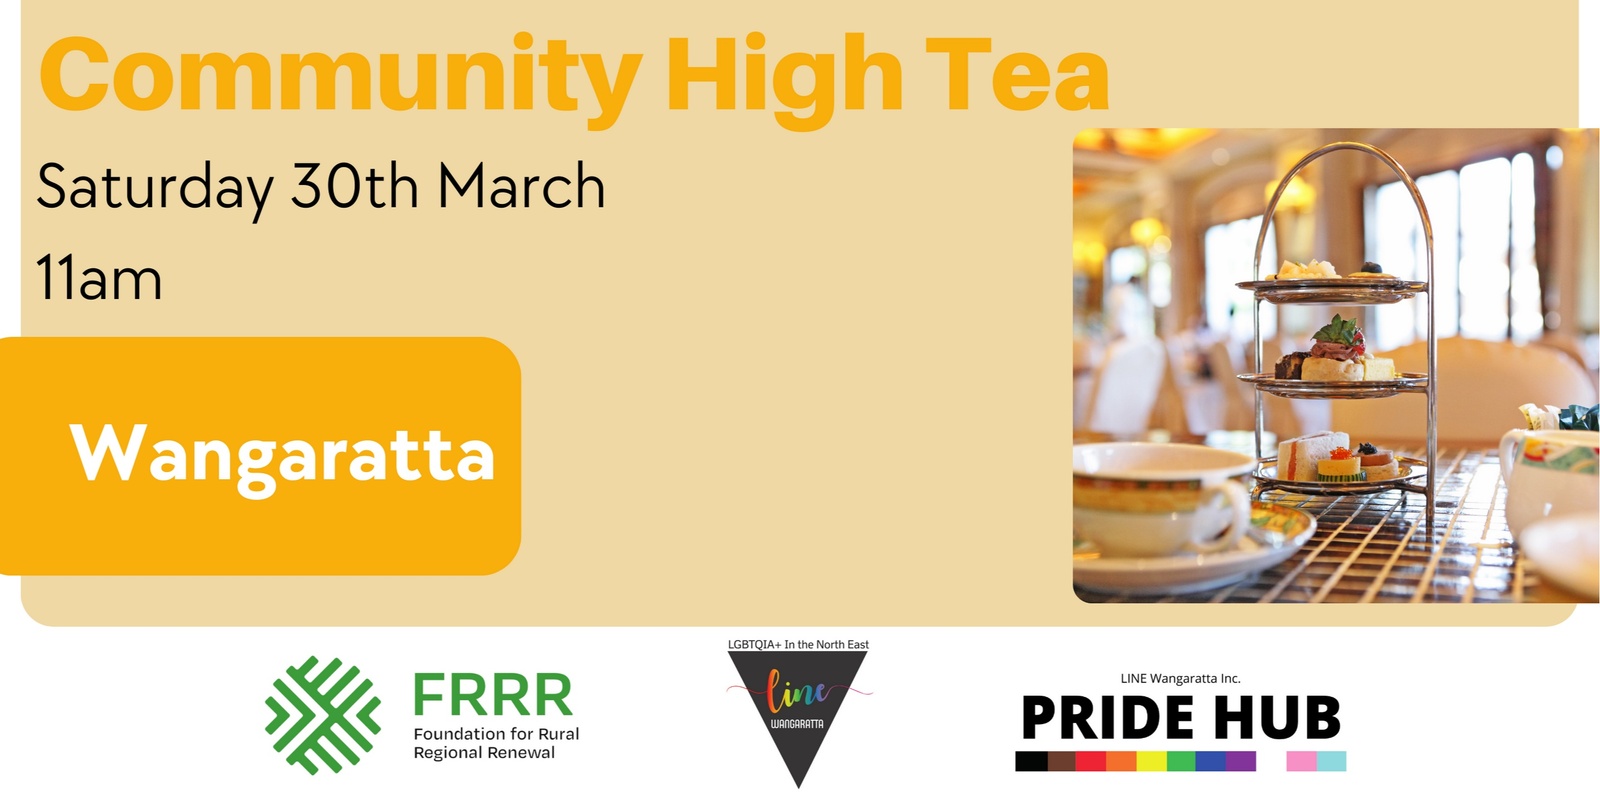 Banner image for Community High Tea